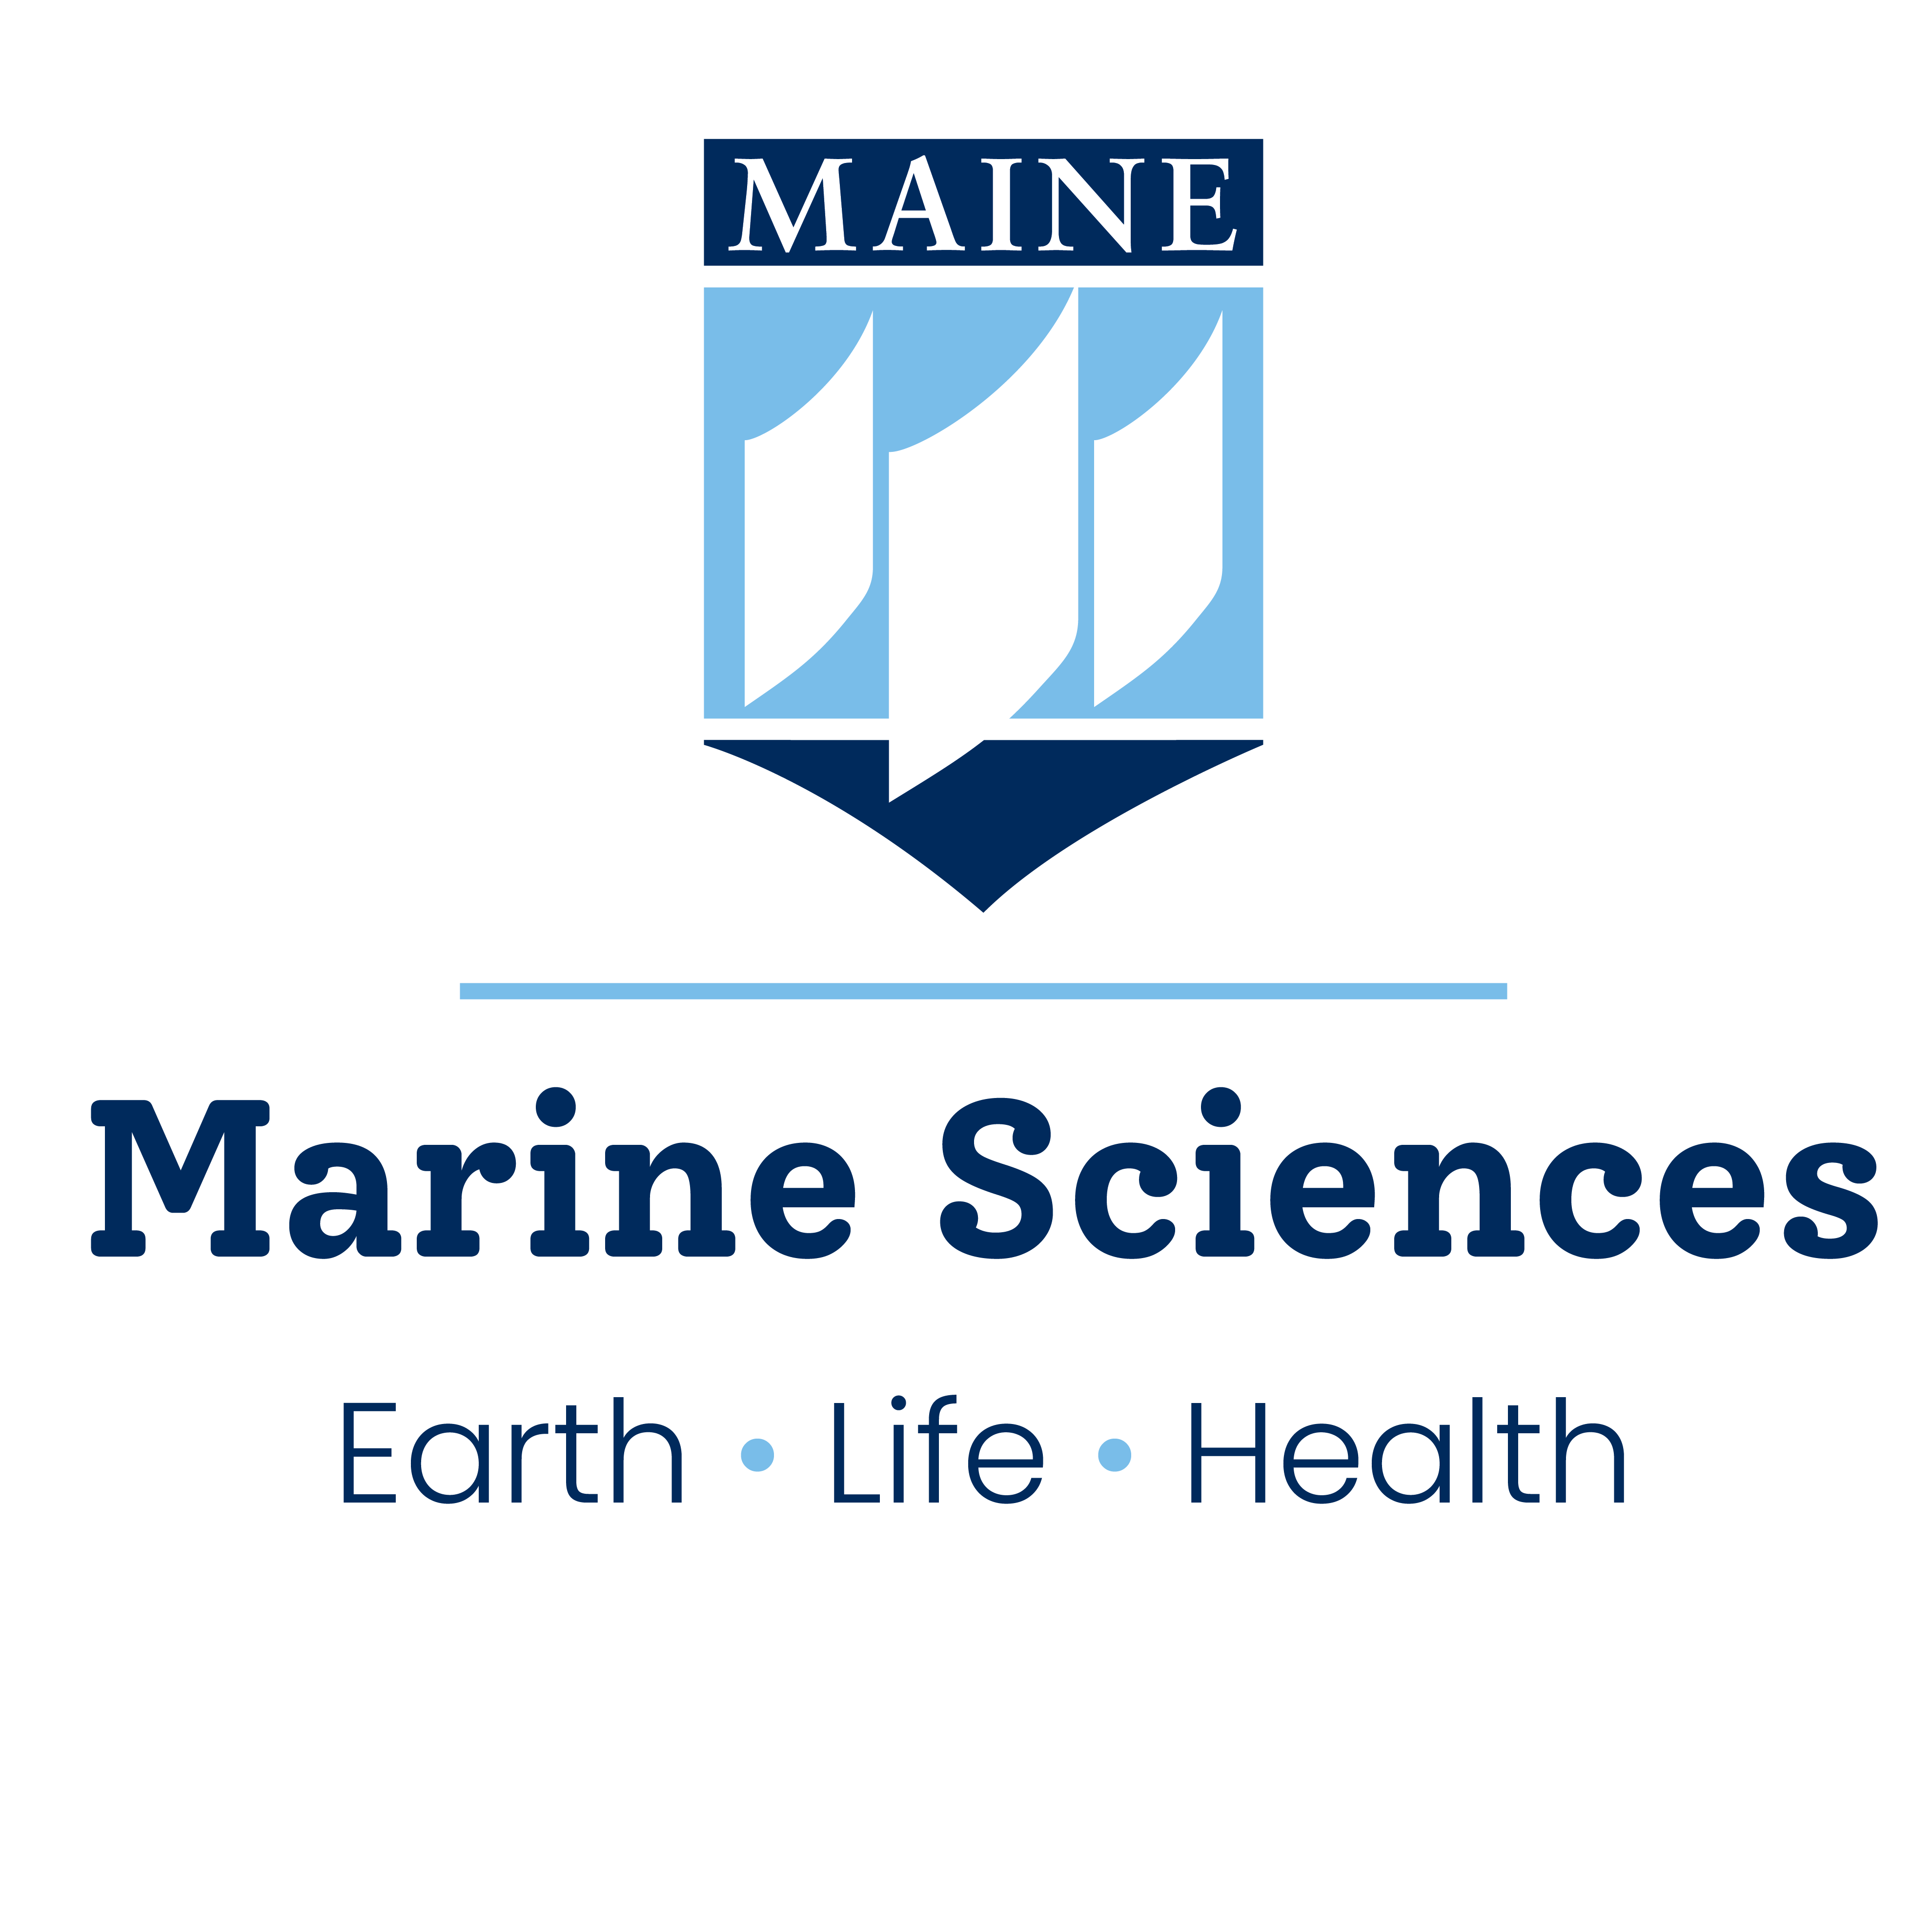 UMaine crest, marine sciences, earth • life • health